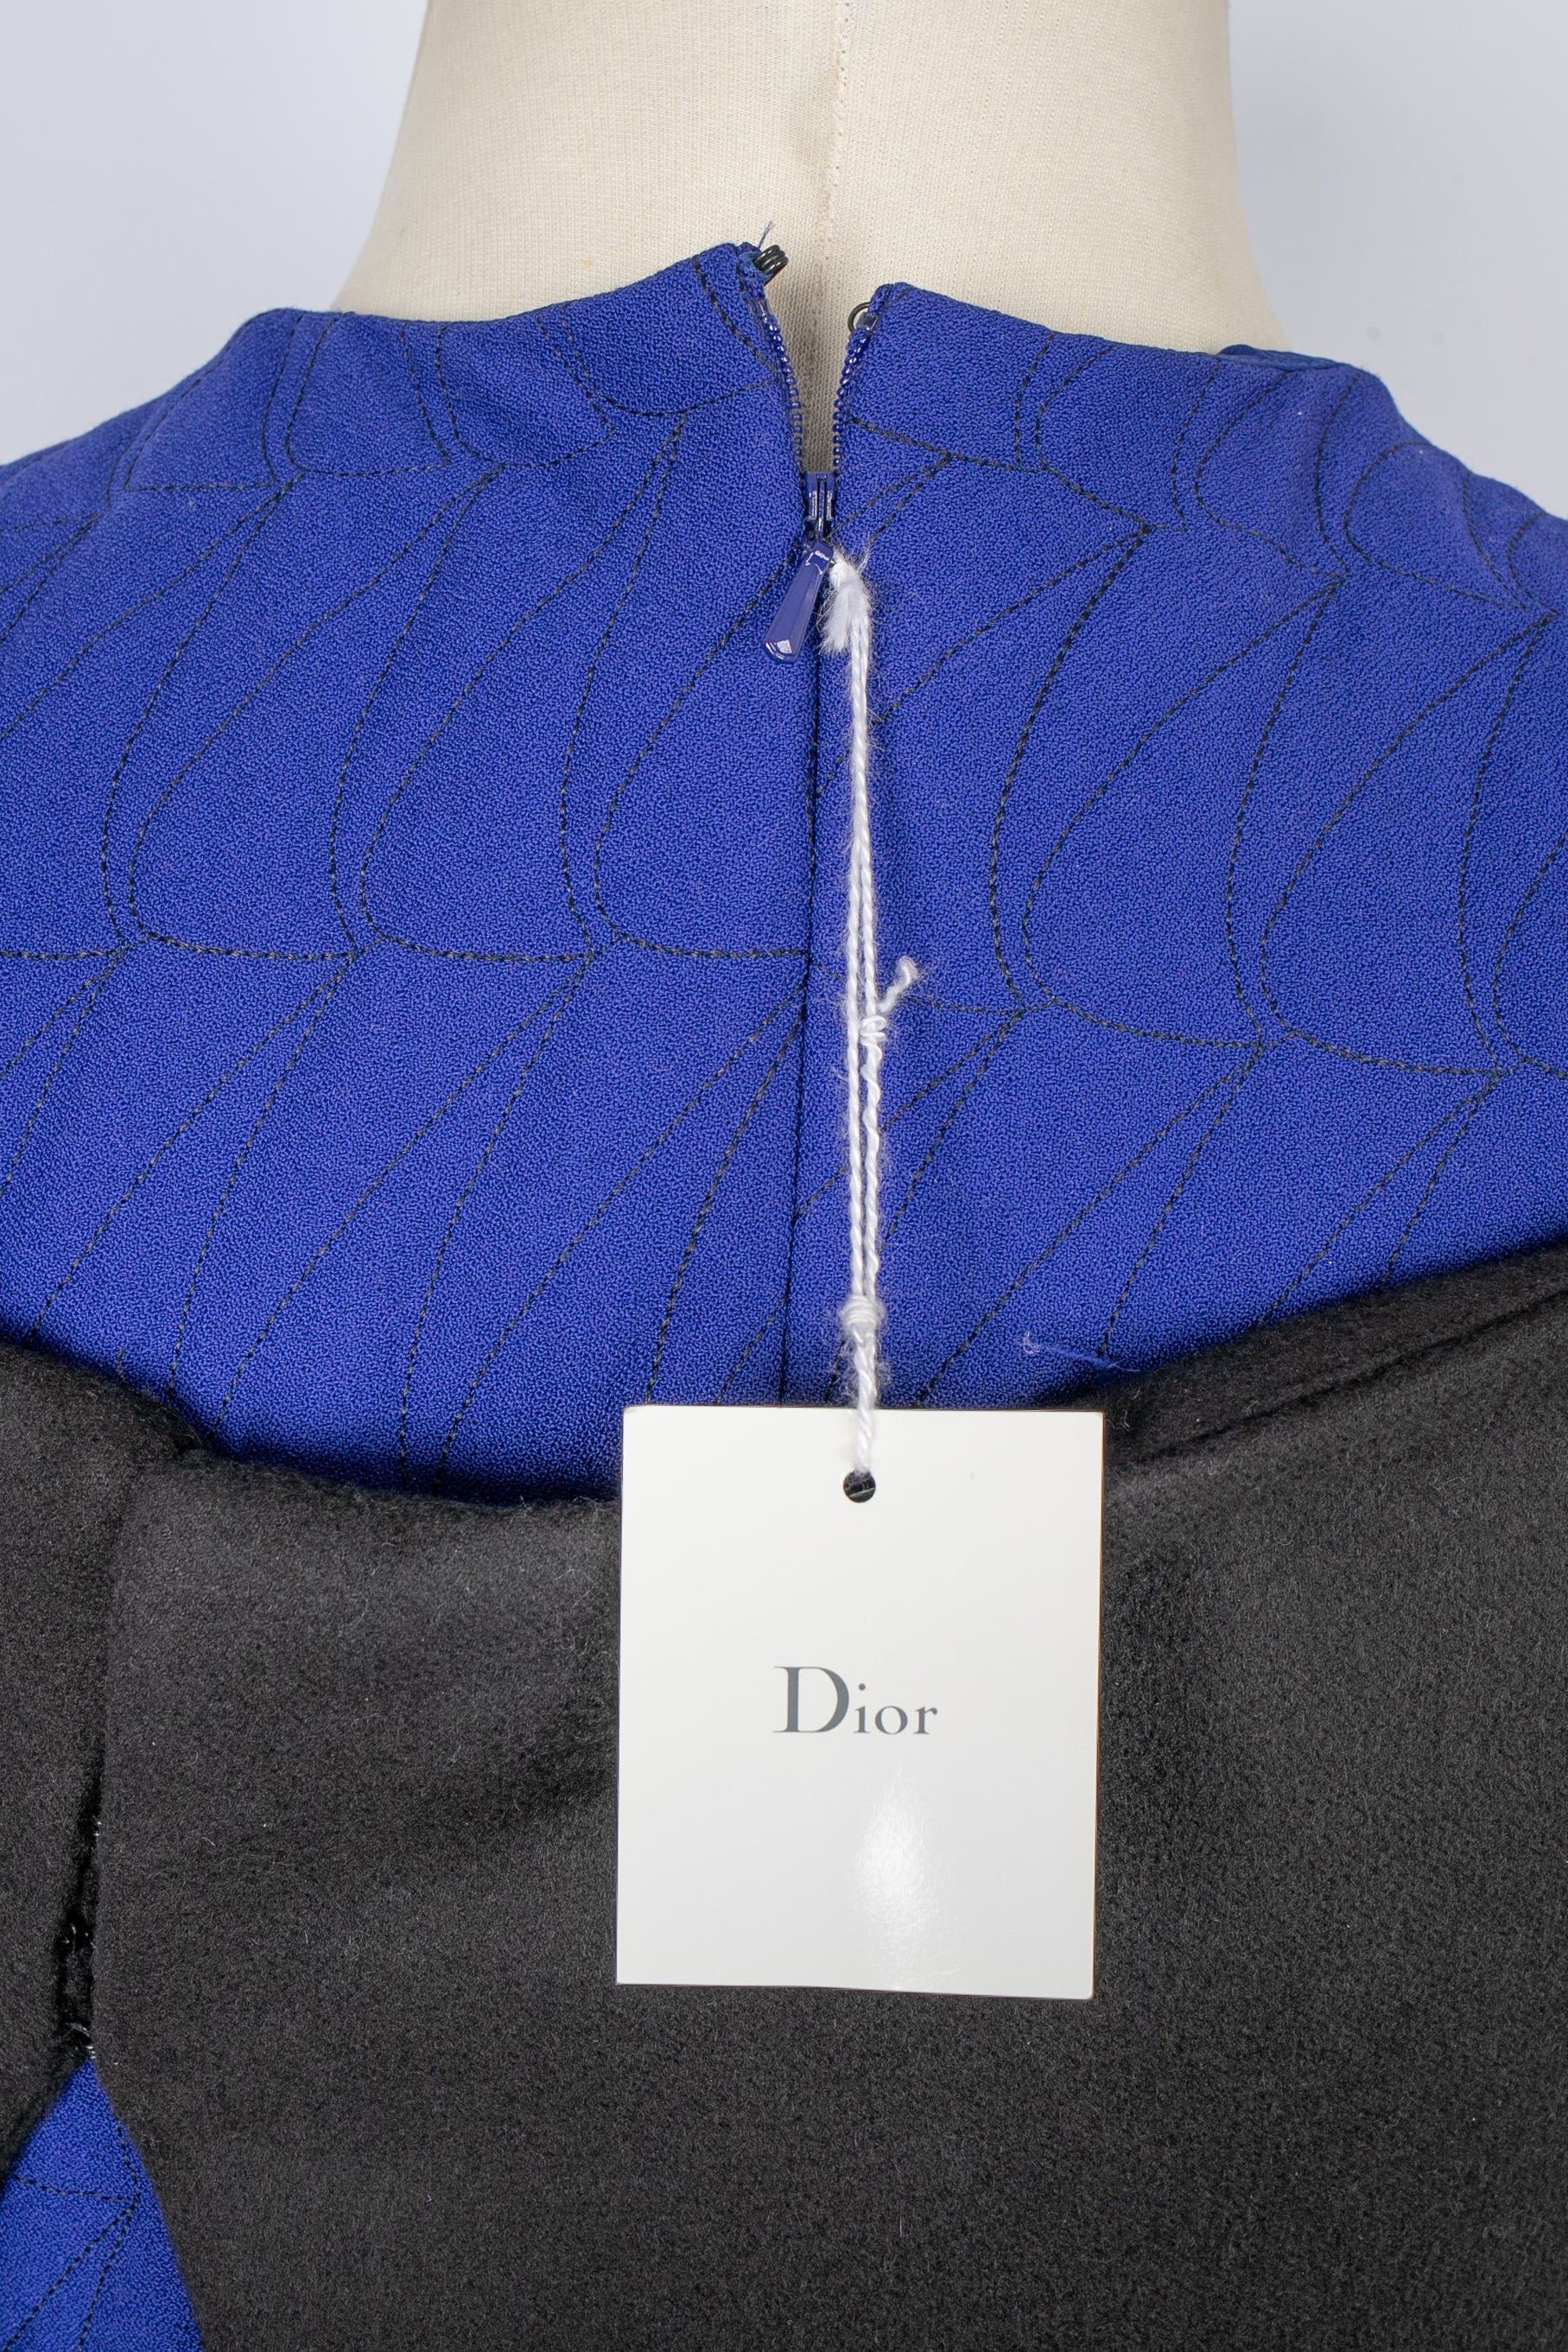 Robe Christian Dior 2014